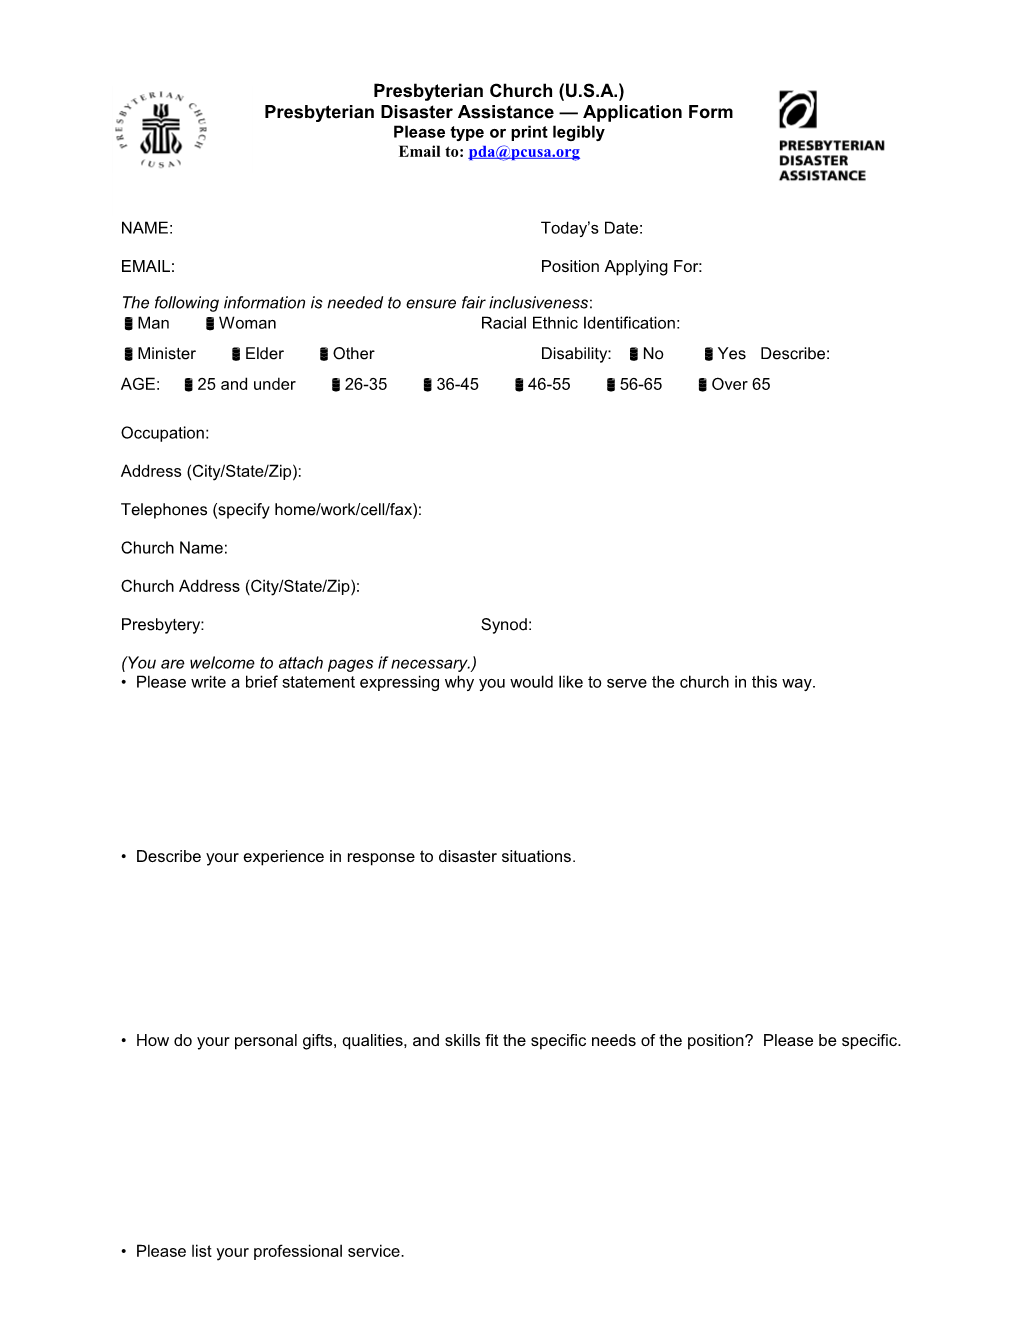 Presbyterian Disaster Assistance Application Form